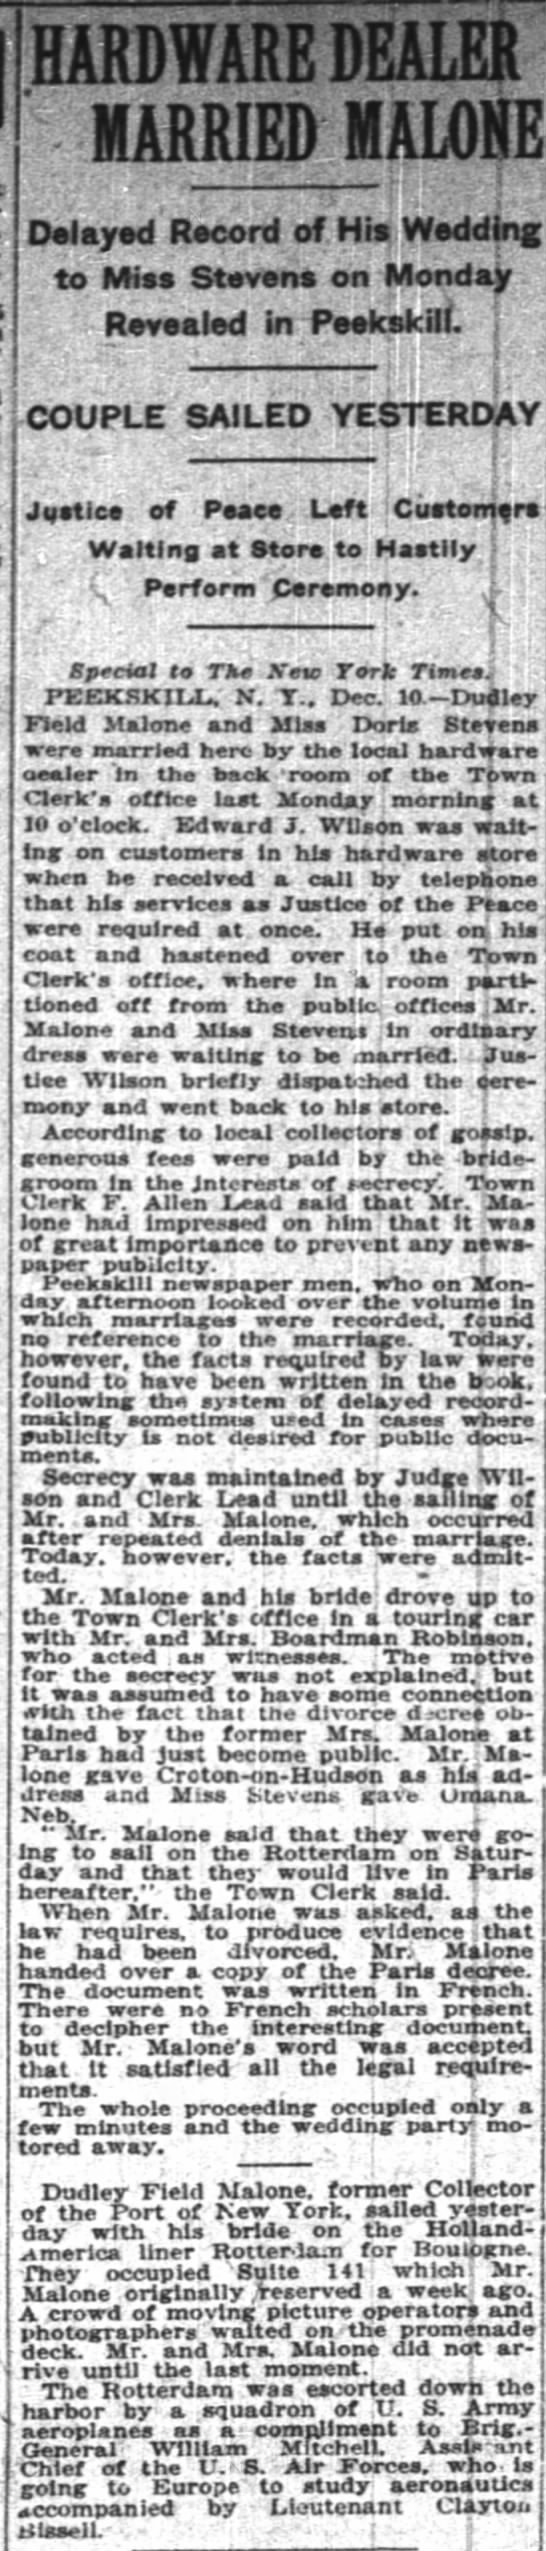 Hardware Dealer Married Malone, The New York Times, (New York, New York), 11 December 1921, p 22 - 